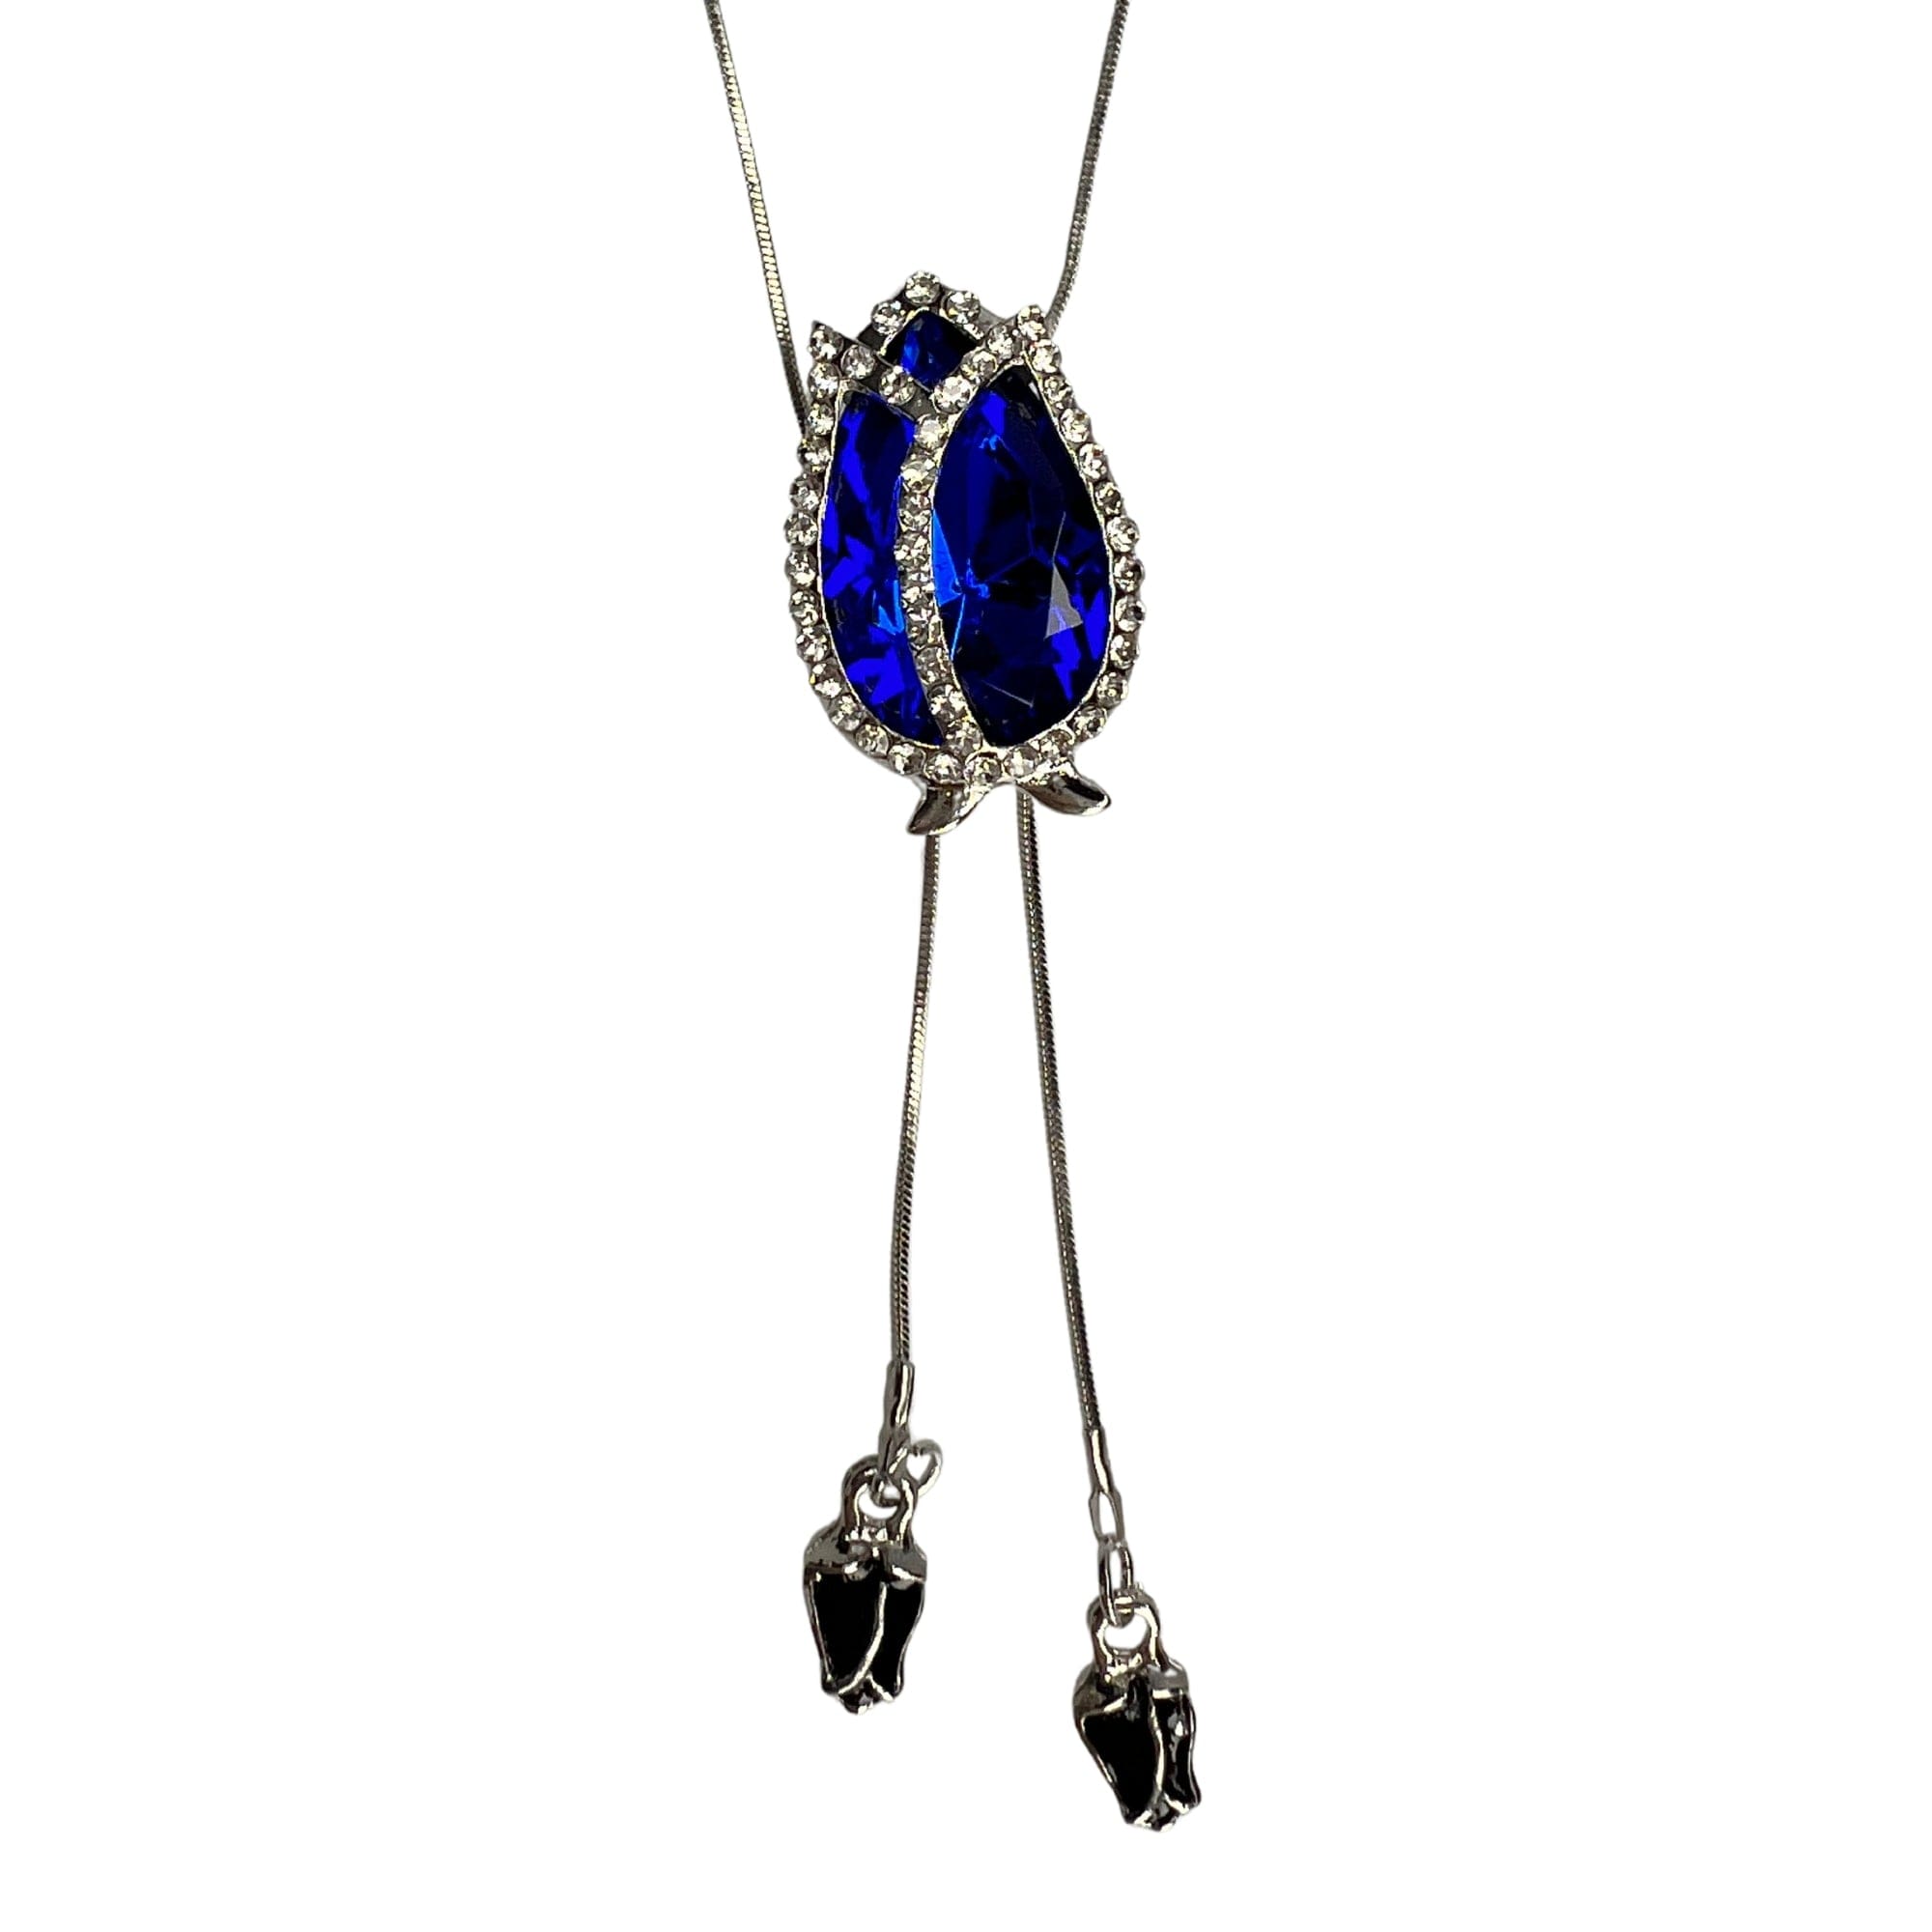 Carmen jewelry necklace - Blue - Necklace